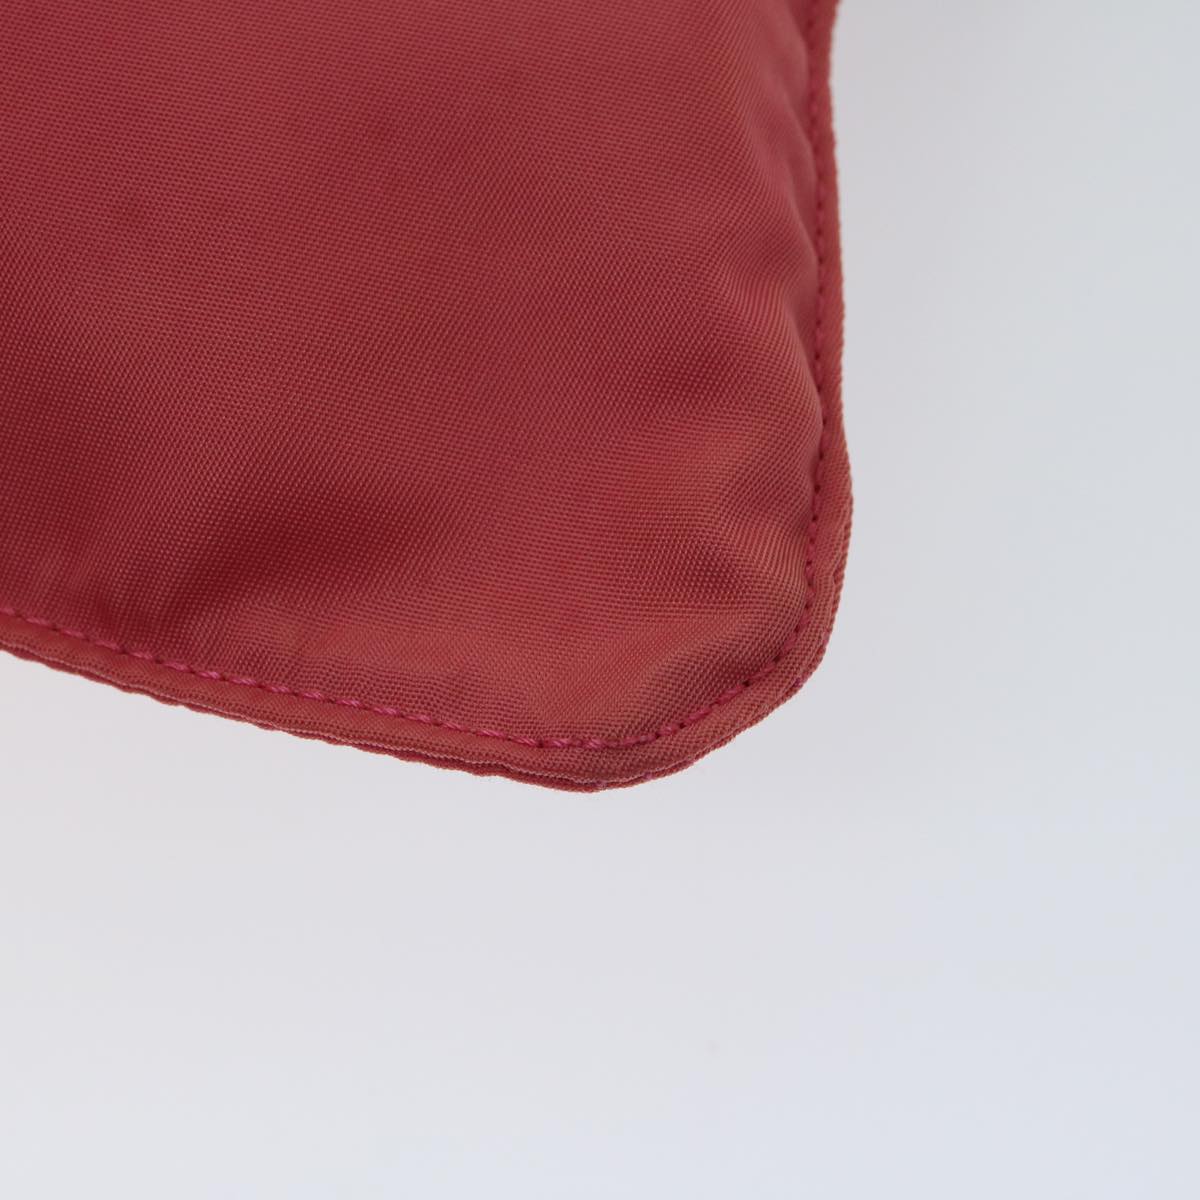 PRADA Shoulder Bag Nylon Pink Auth ep3381